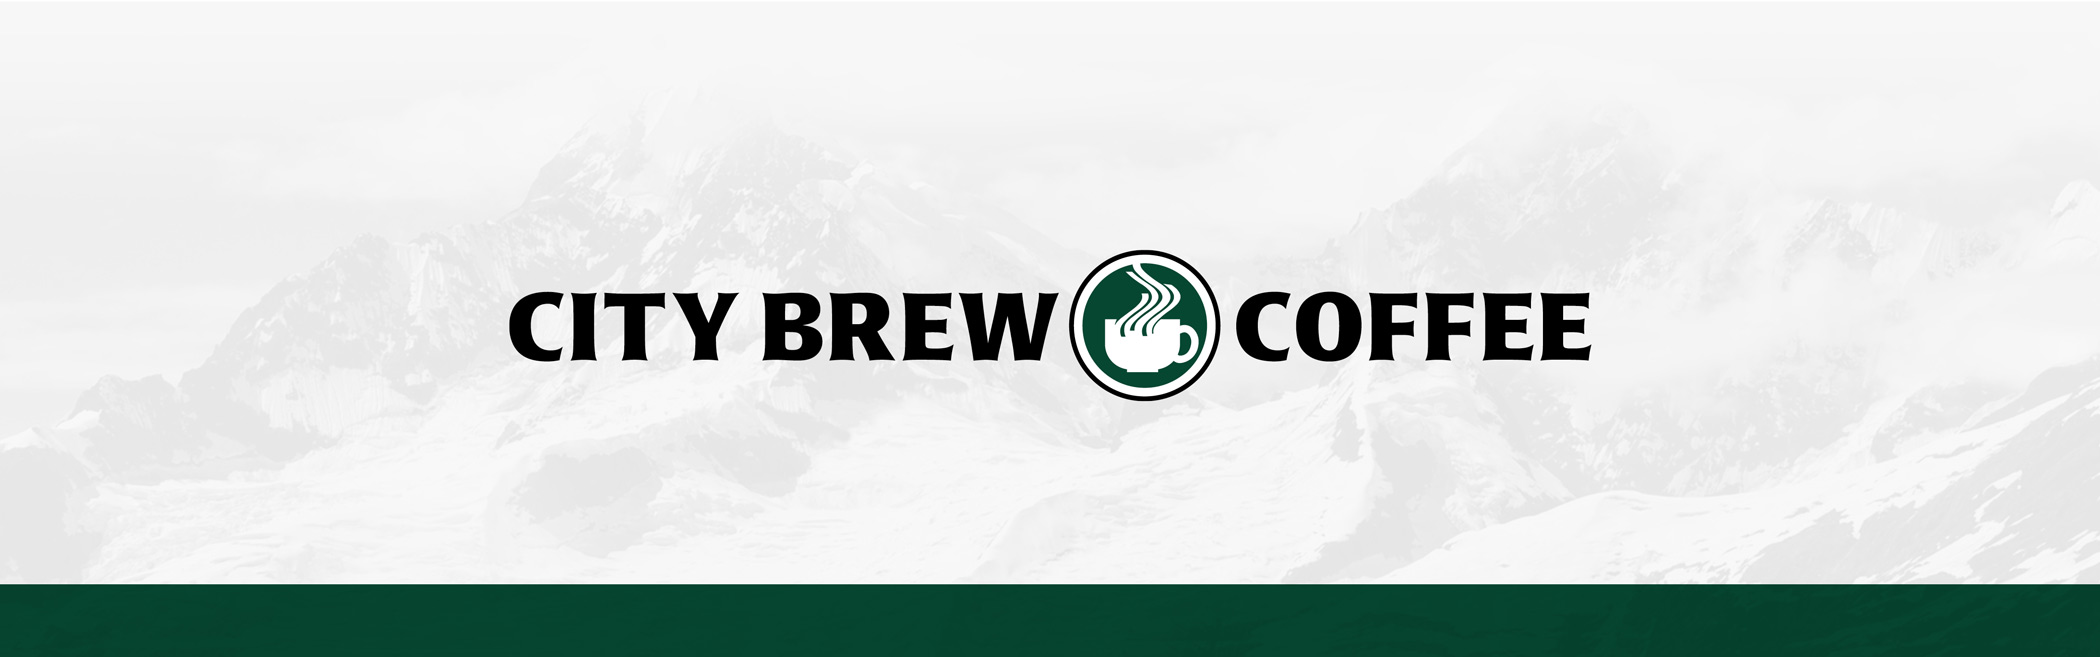 city brew logo